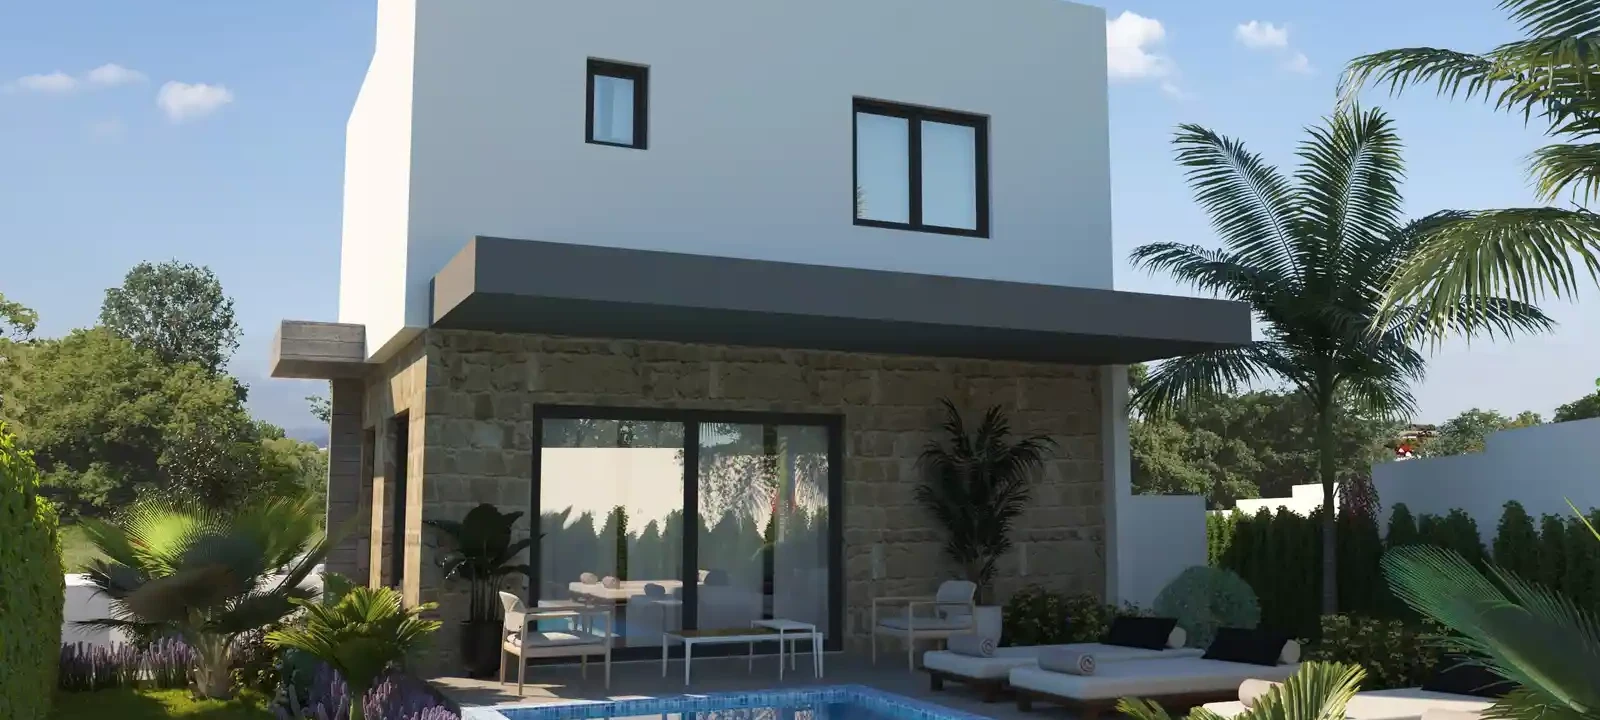 3-bedroom villa fоr sаle €390.000, image 1